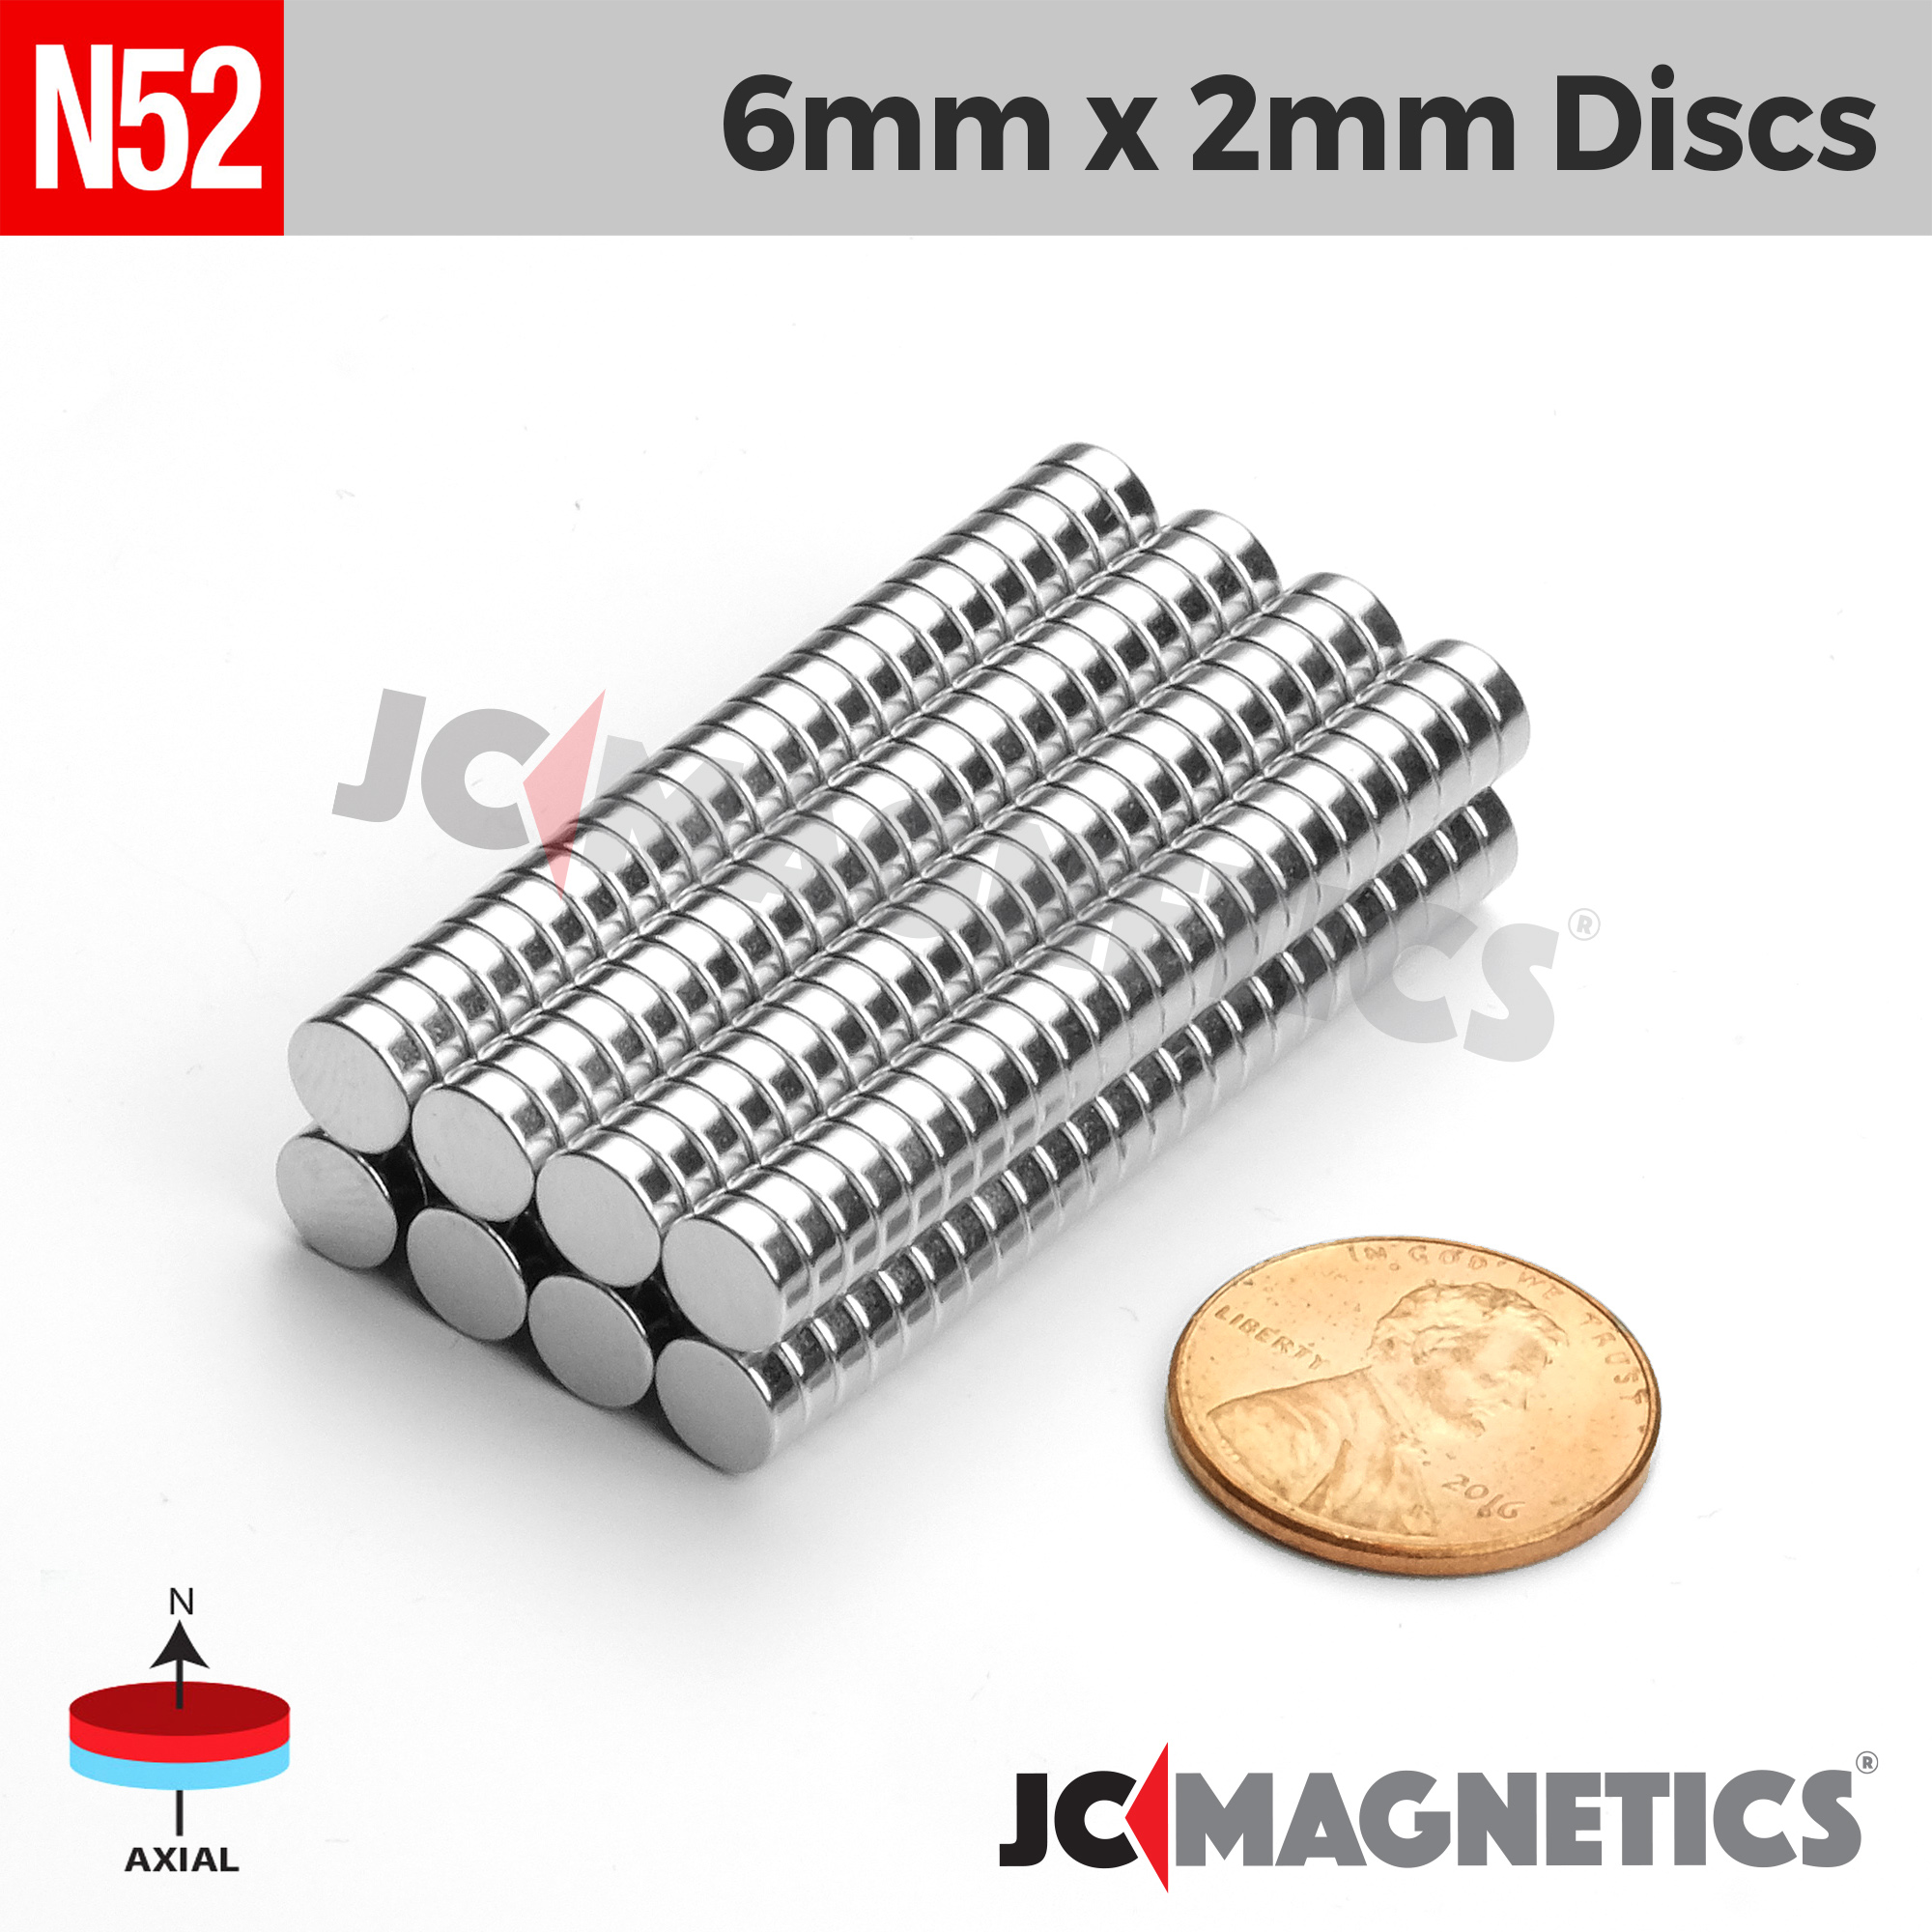 https://jc-magnetics.com/image/cache/catalog/magnets/6x2mm-disc-n52-2000x2000.jpg